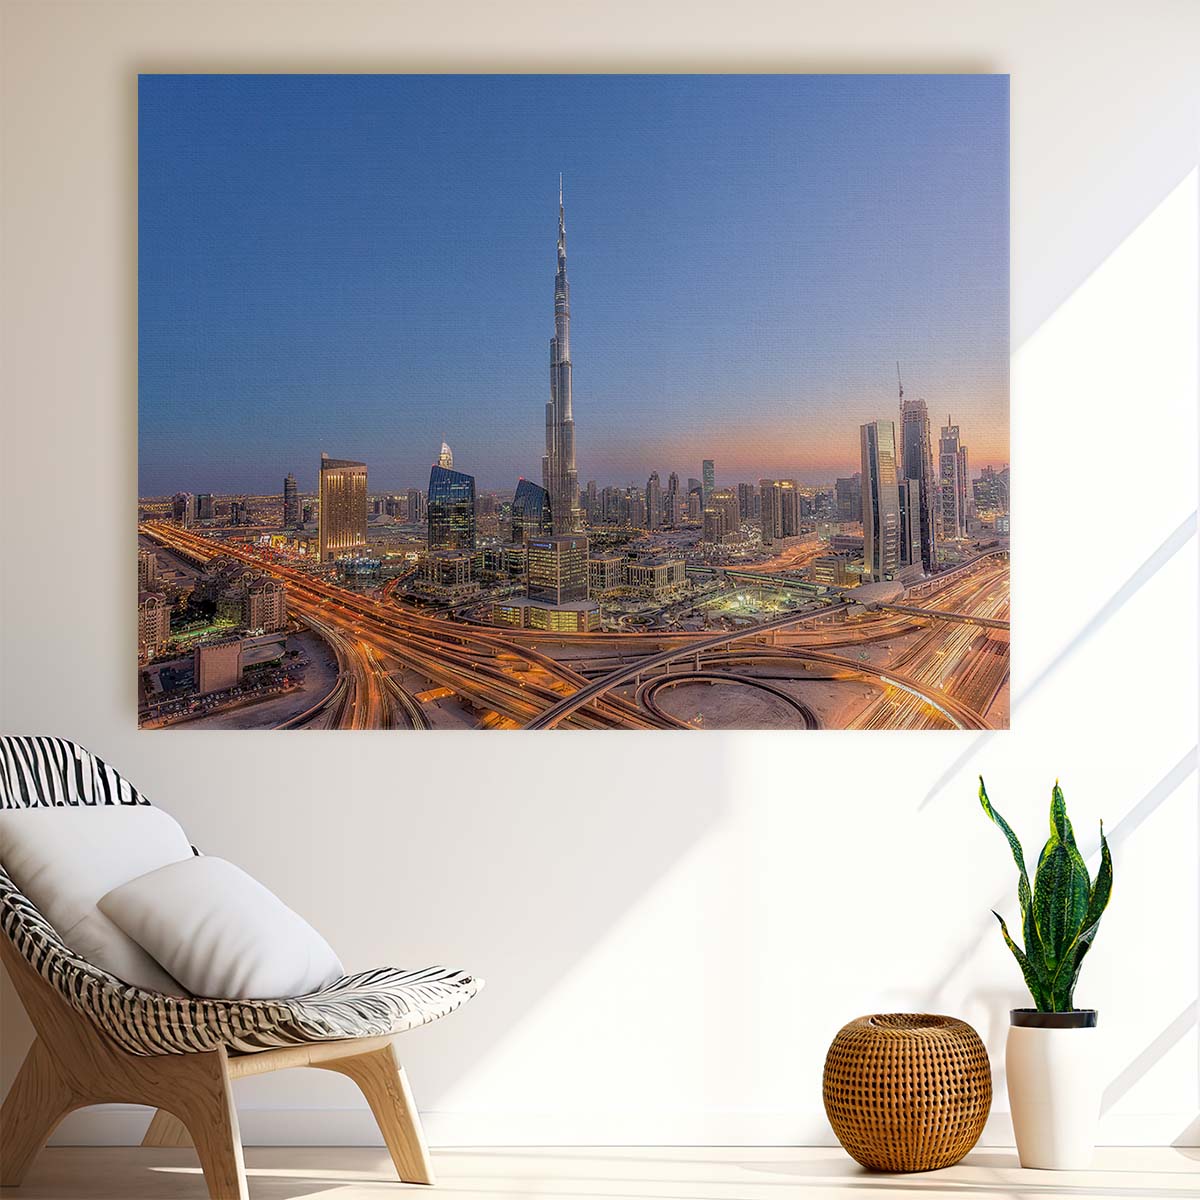 Dubai's Iconic Burj Khalifa Skyline Night View Wall Art by Luxuriance Designs. Made in USA.